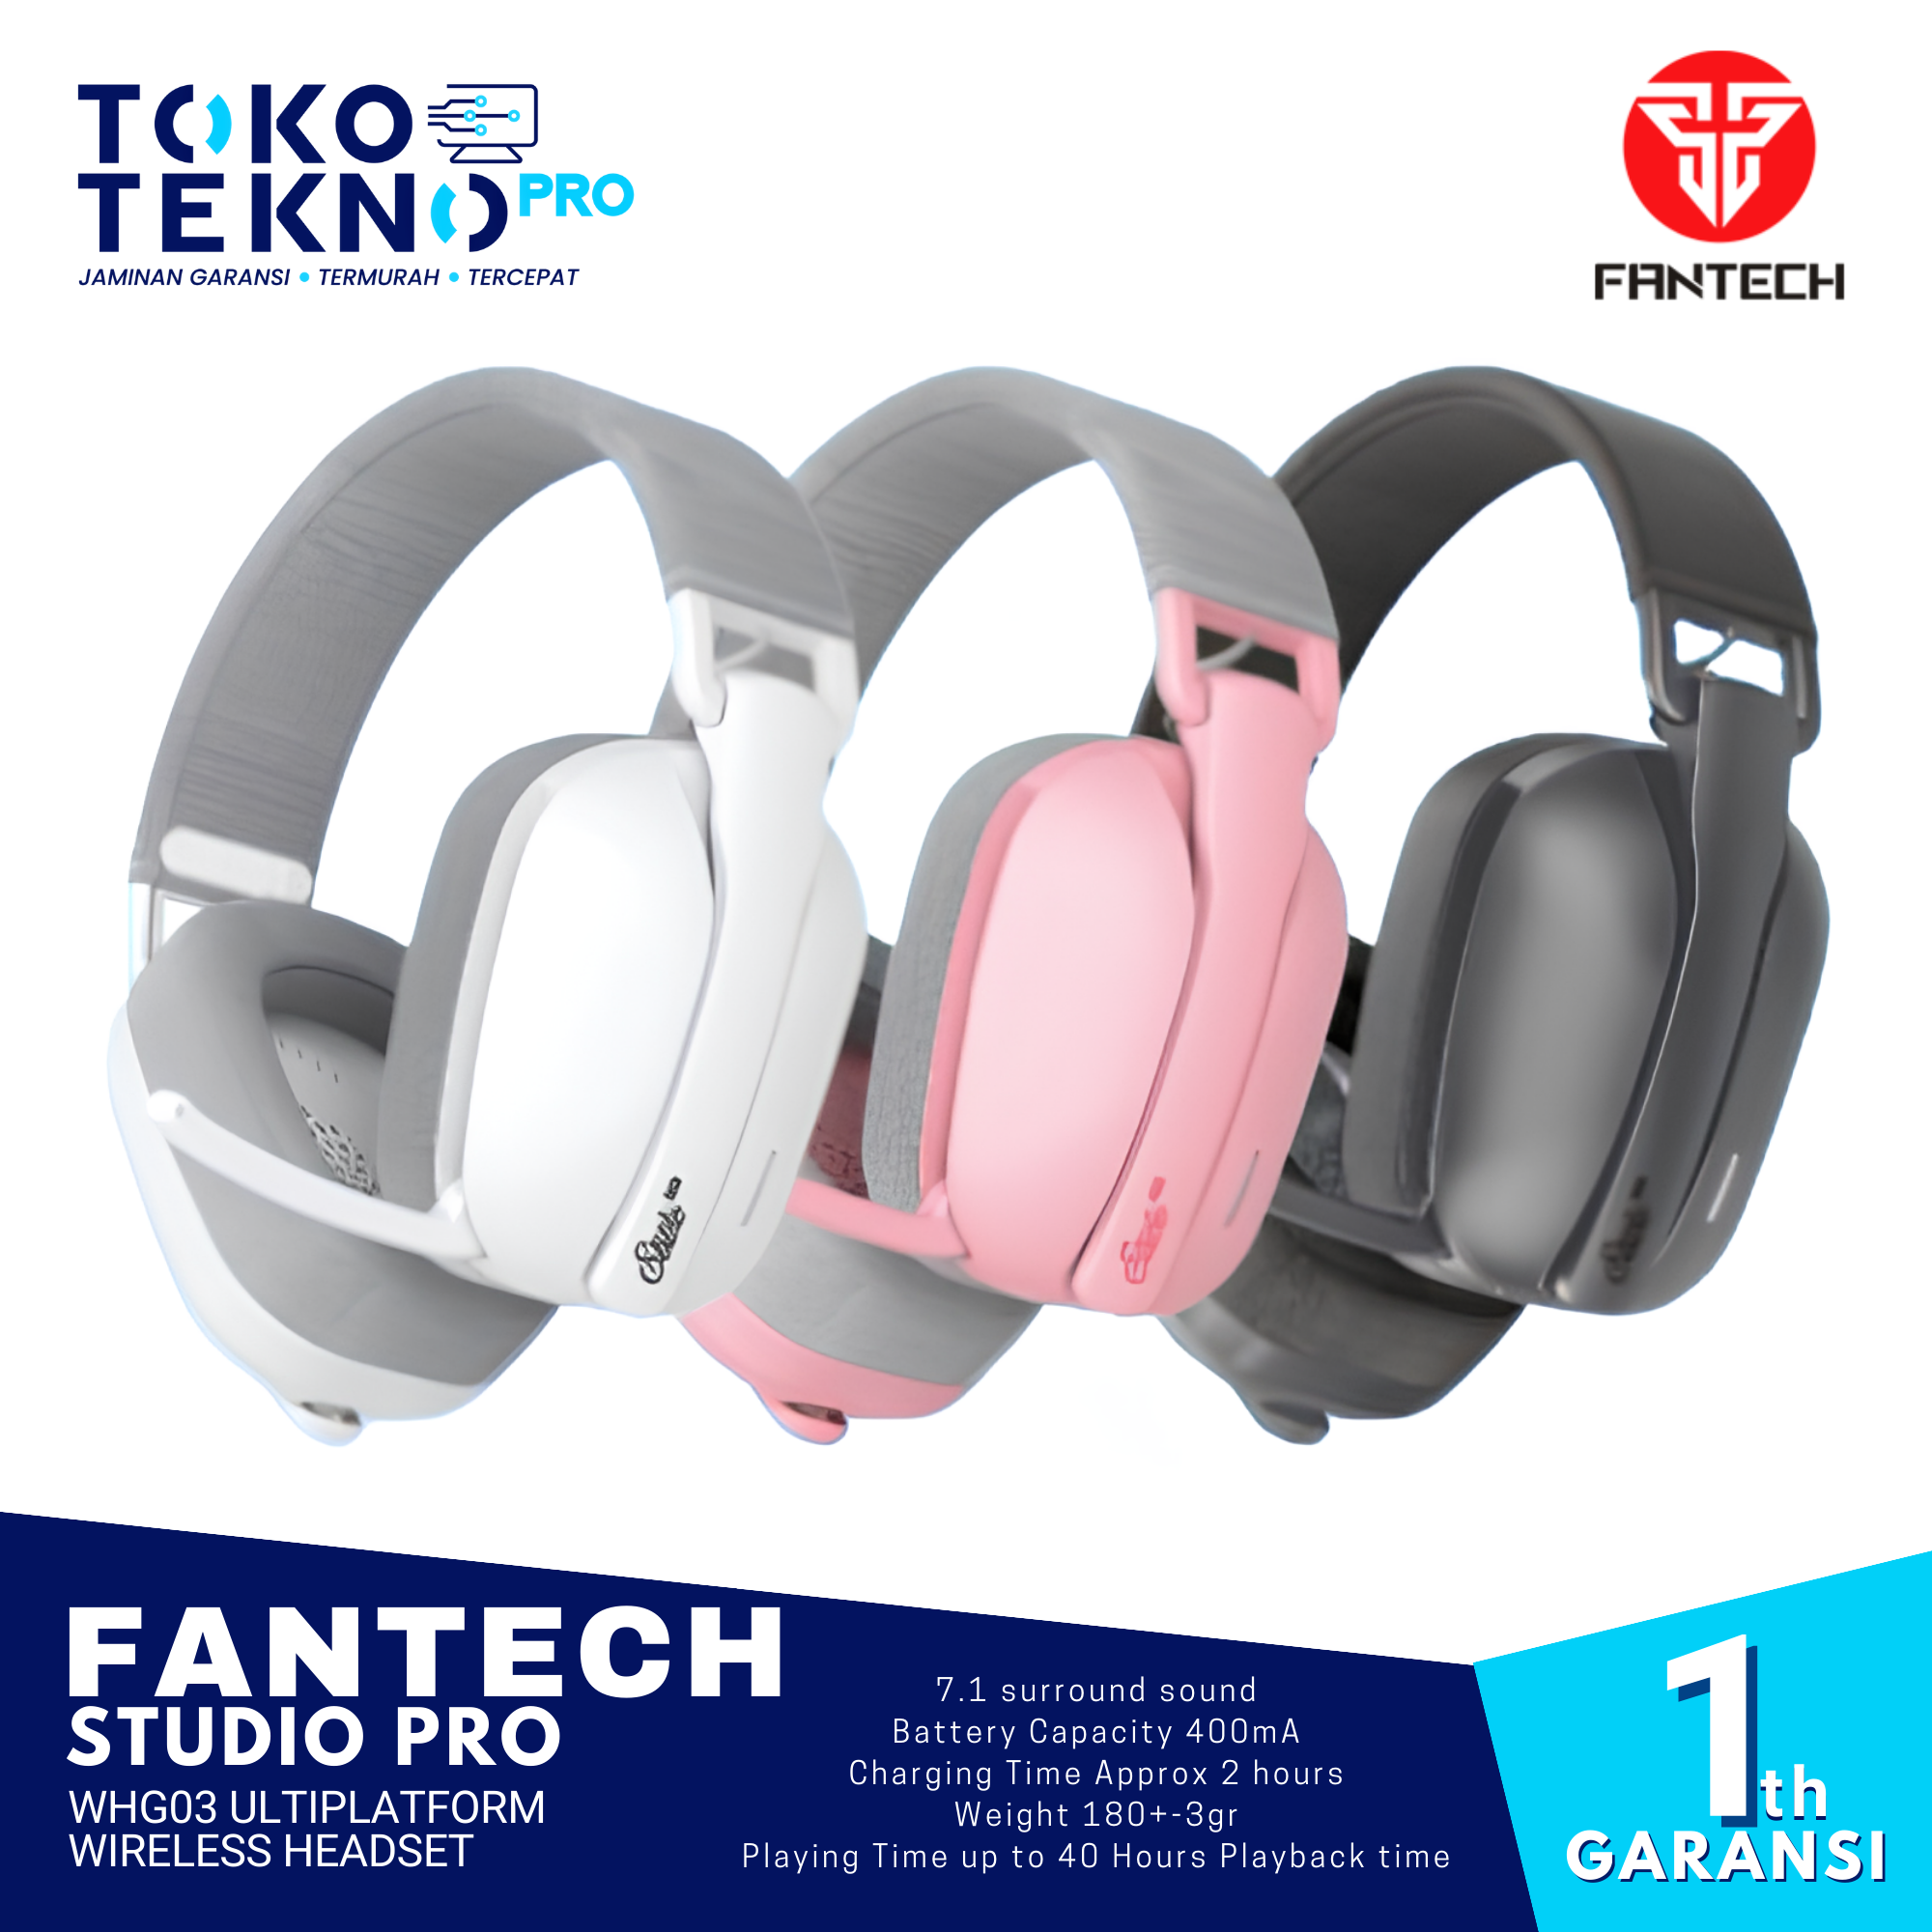 Fantech Studio Pro WHG03